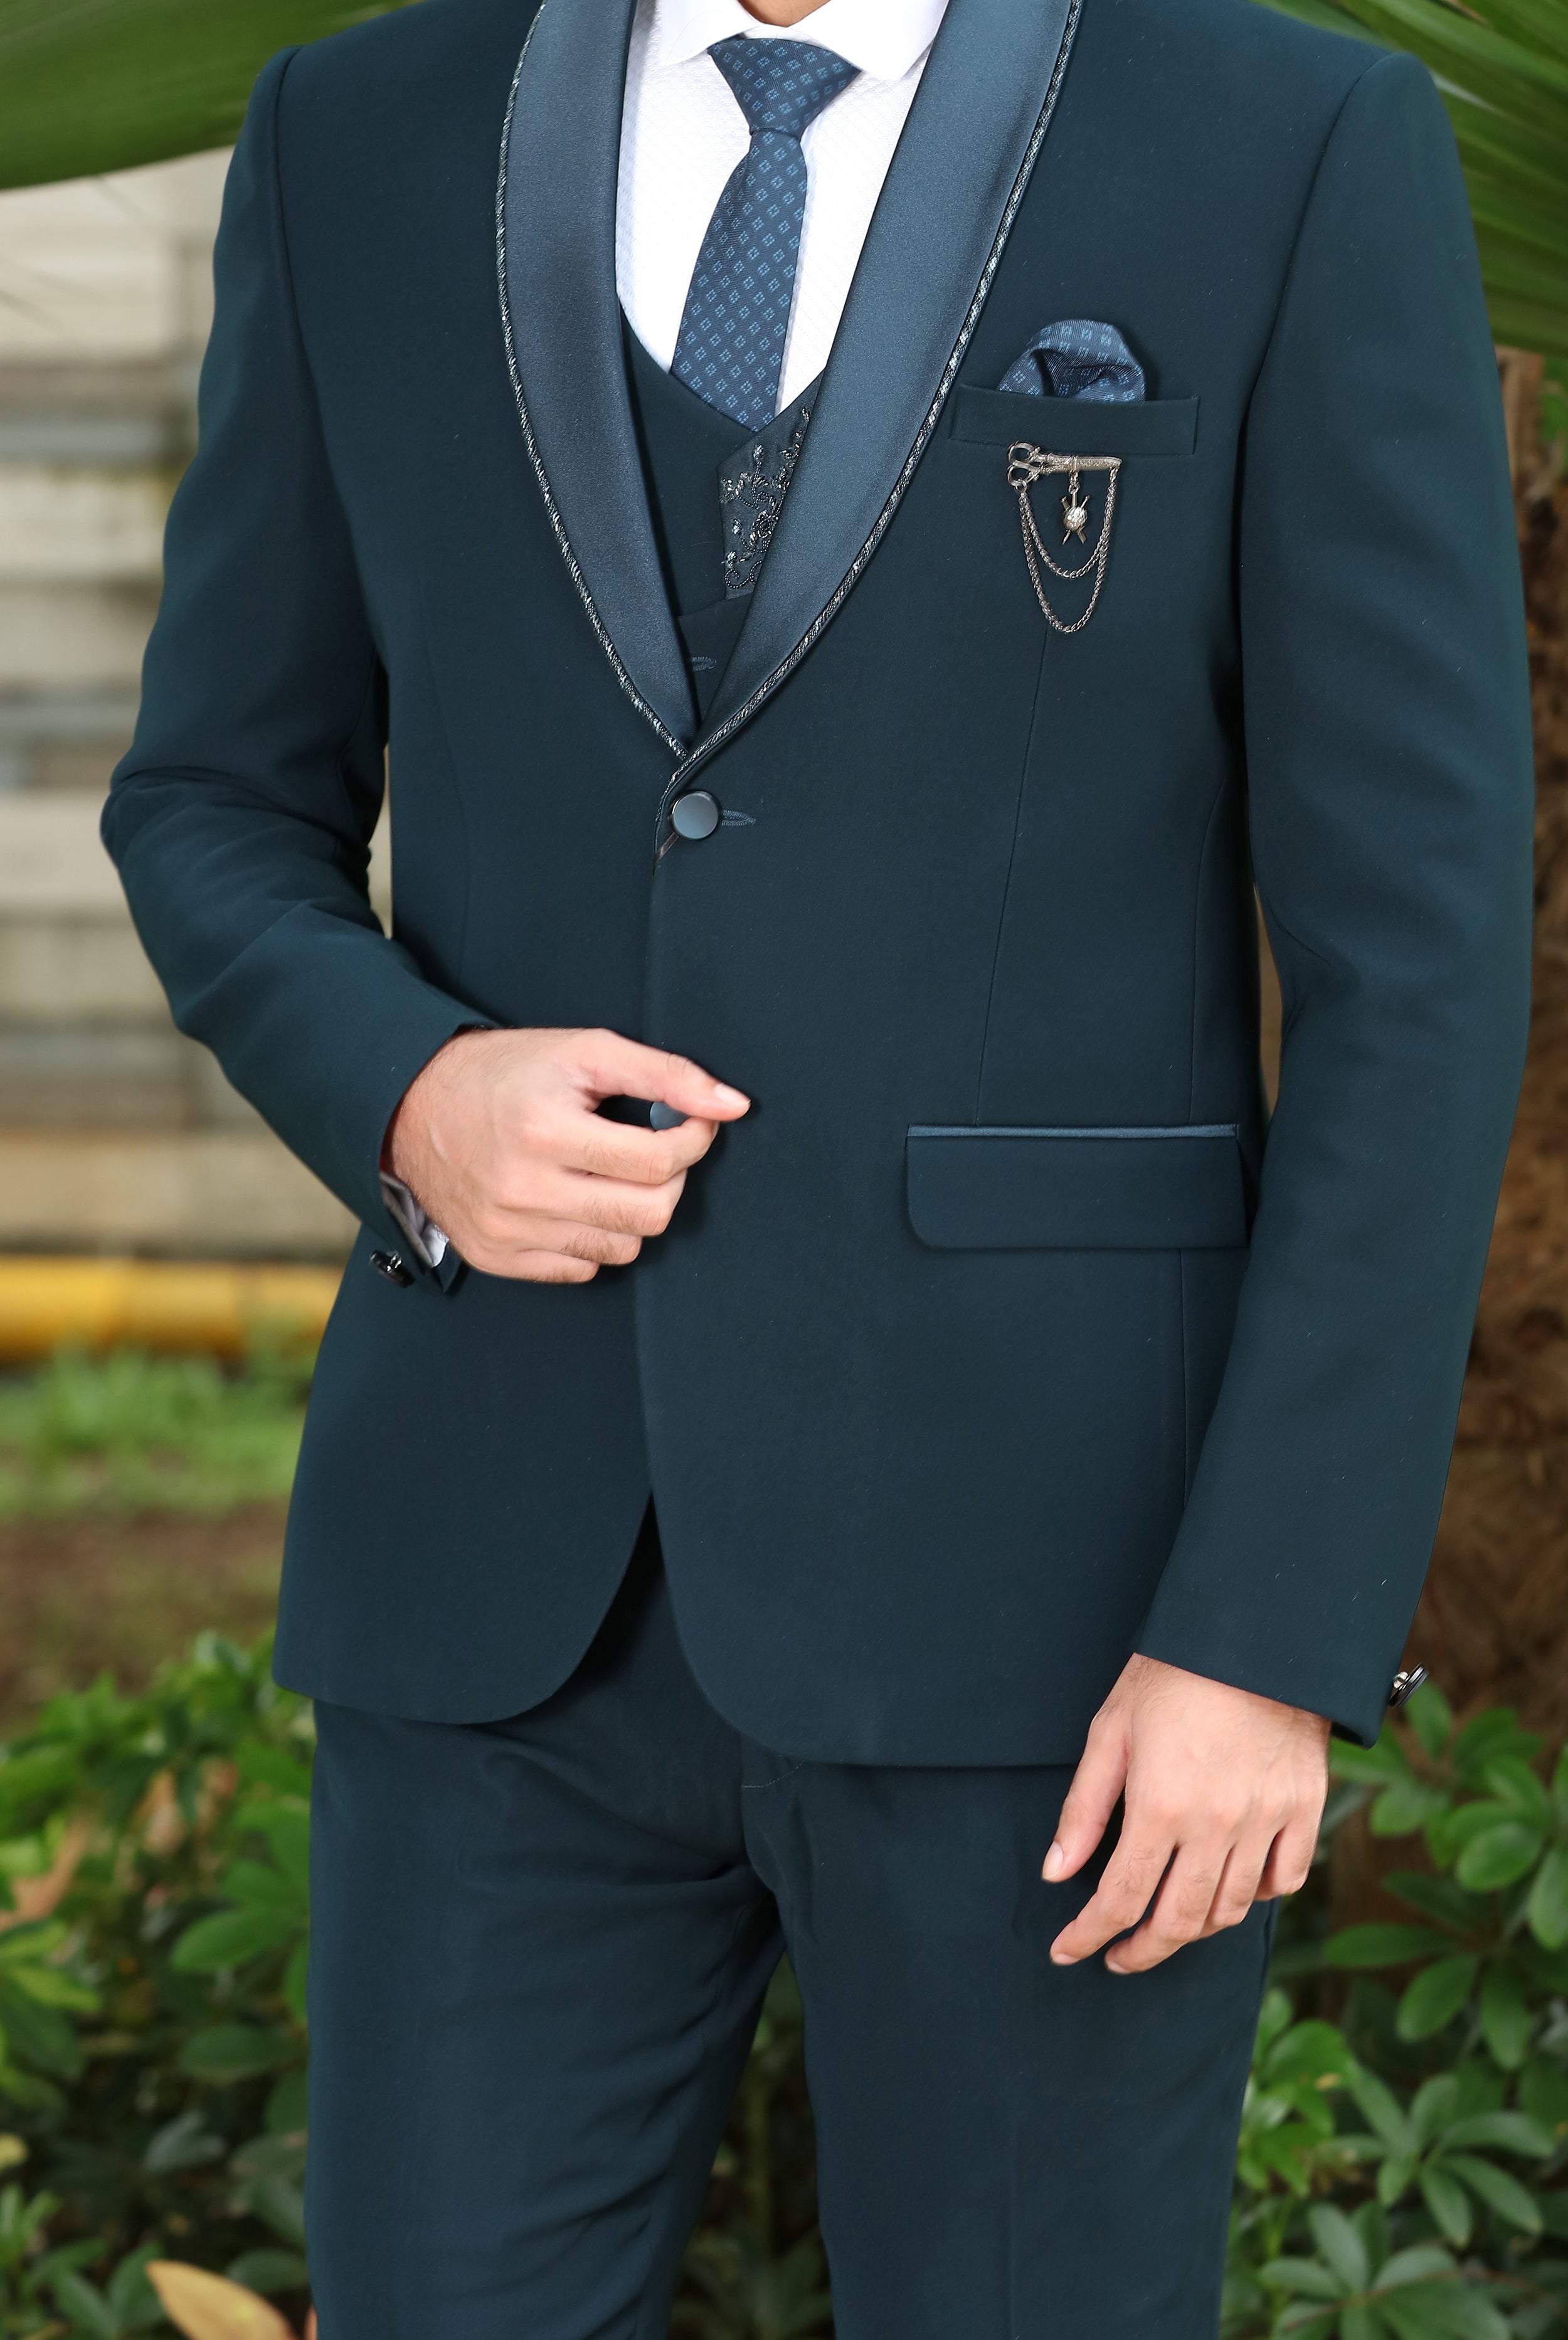 Edward Blue Plain-Solid Premium Cotton Bandhgala/Jodhpuri Suits for Men.